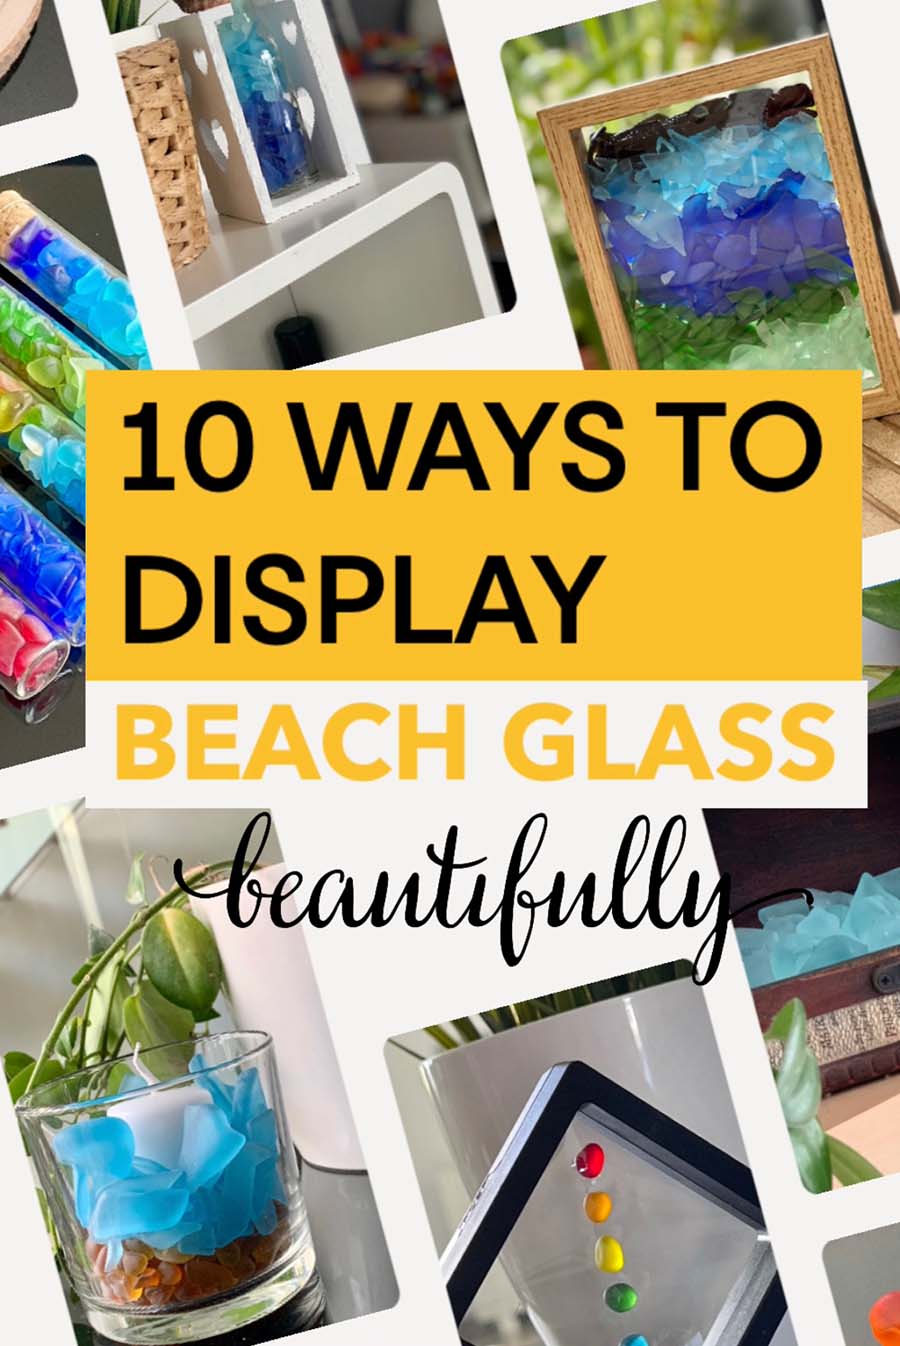 10 Ways To Display Beach Glass Beautifully - Love Sea Glass